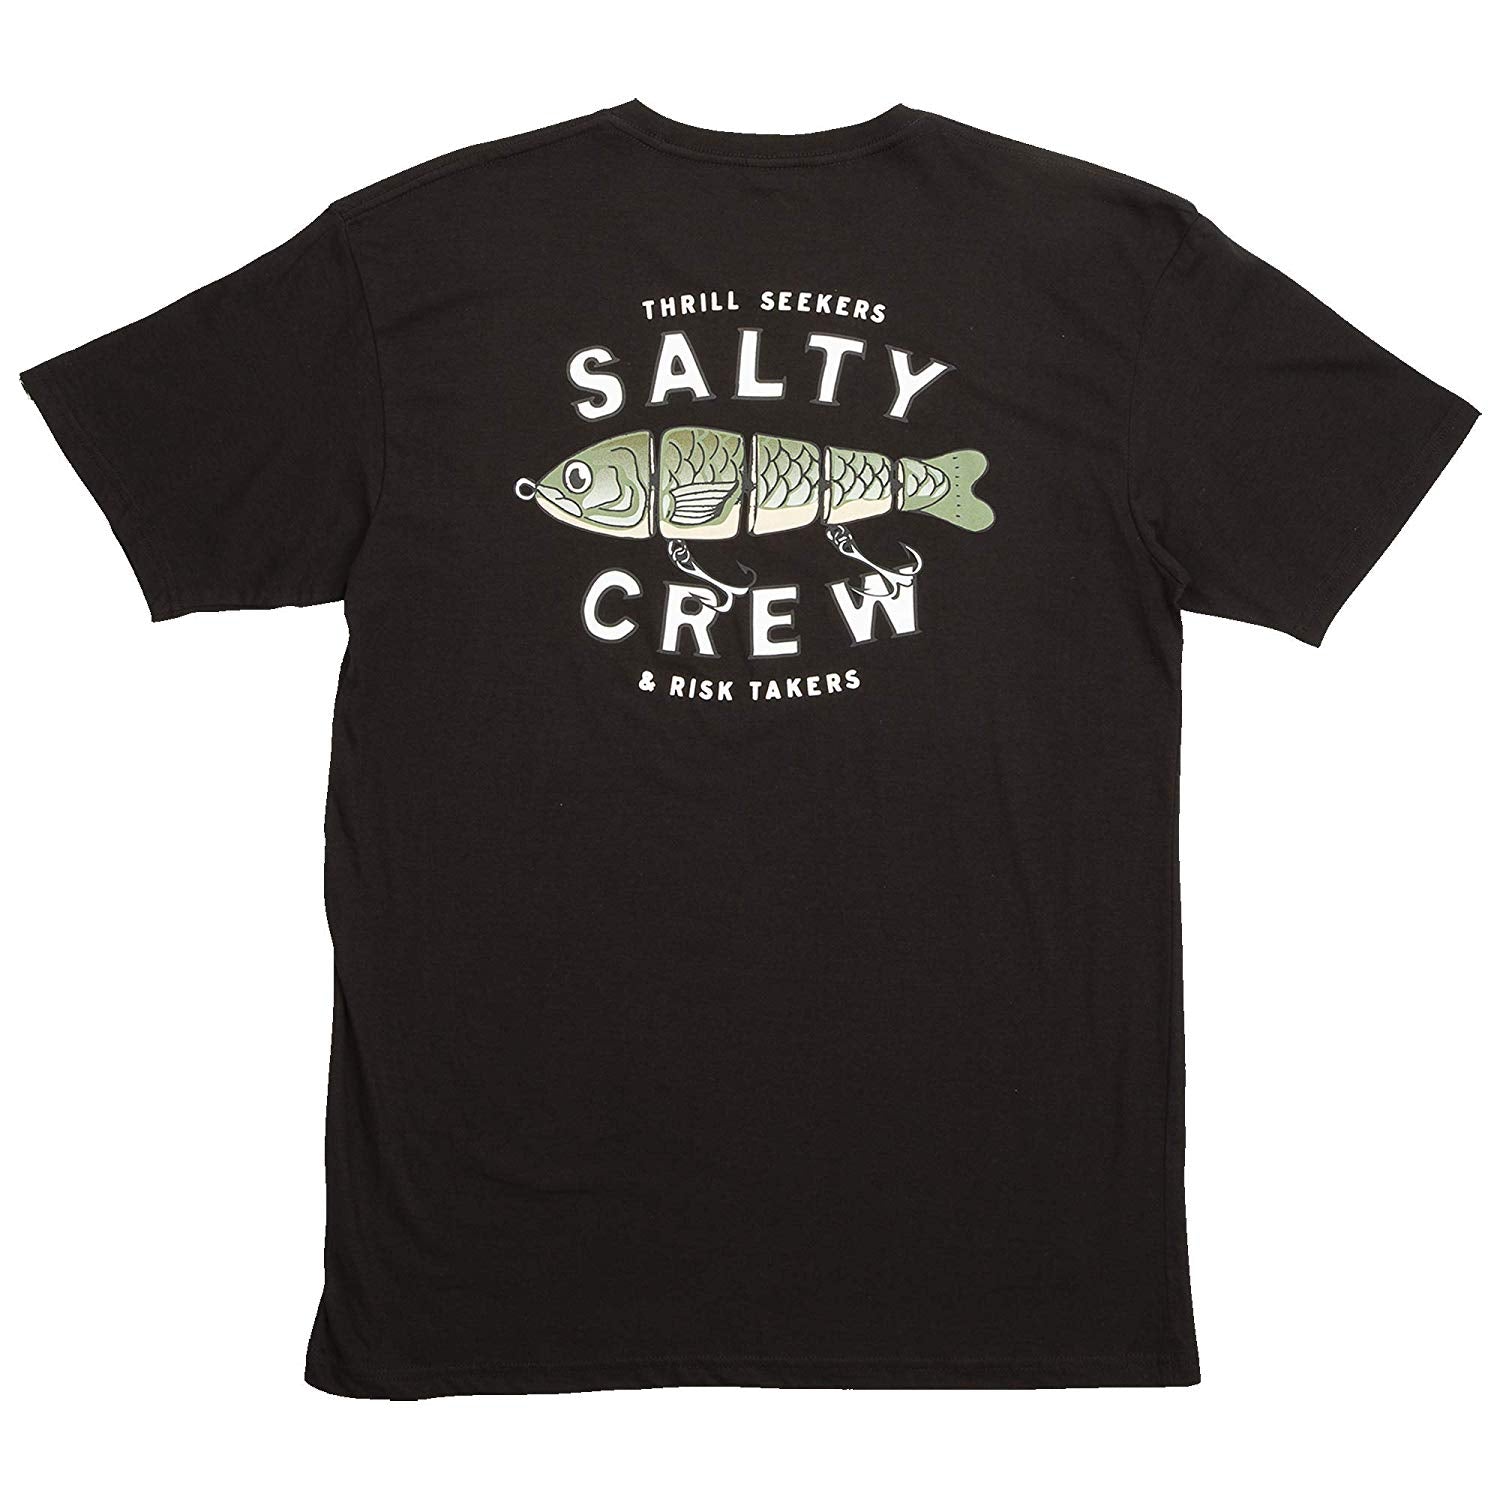 Salty Crew Paddle Tail Boys SS Tee Black S